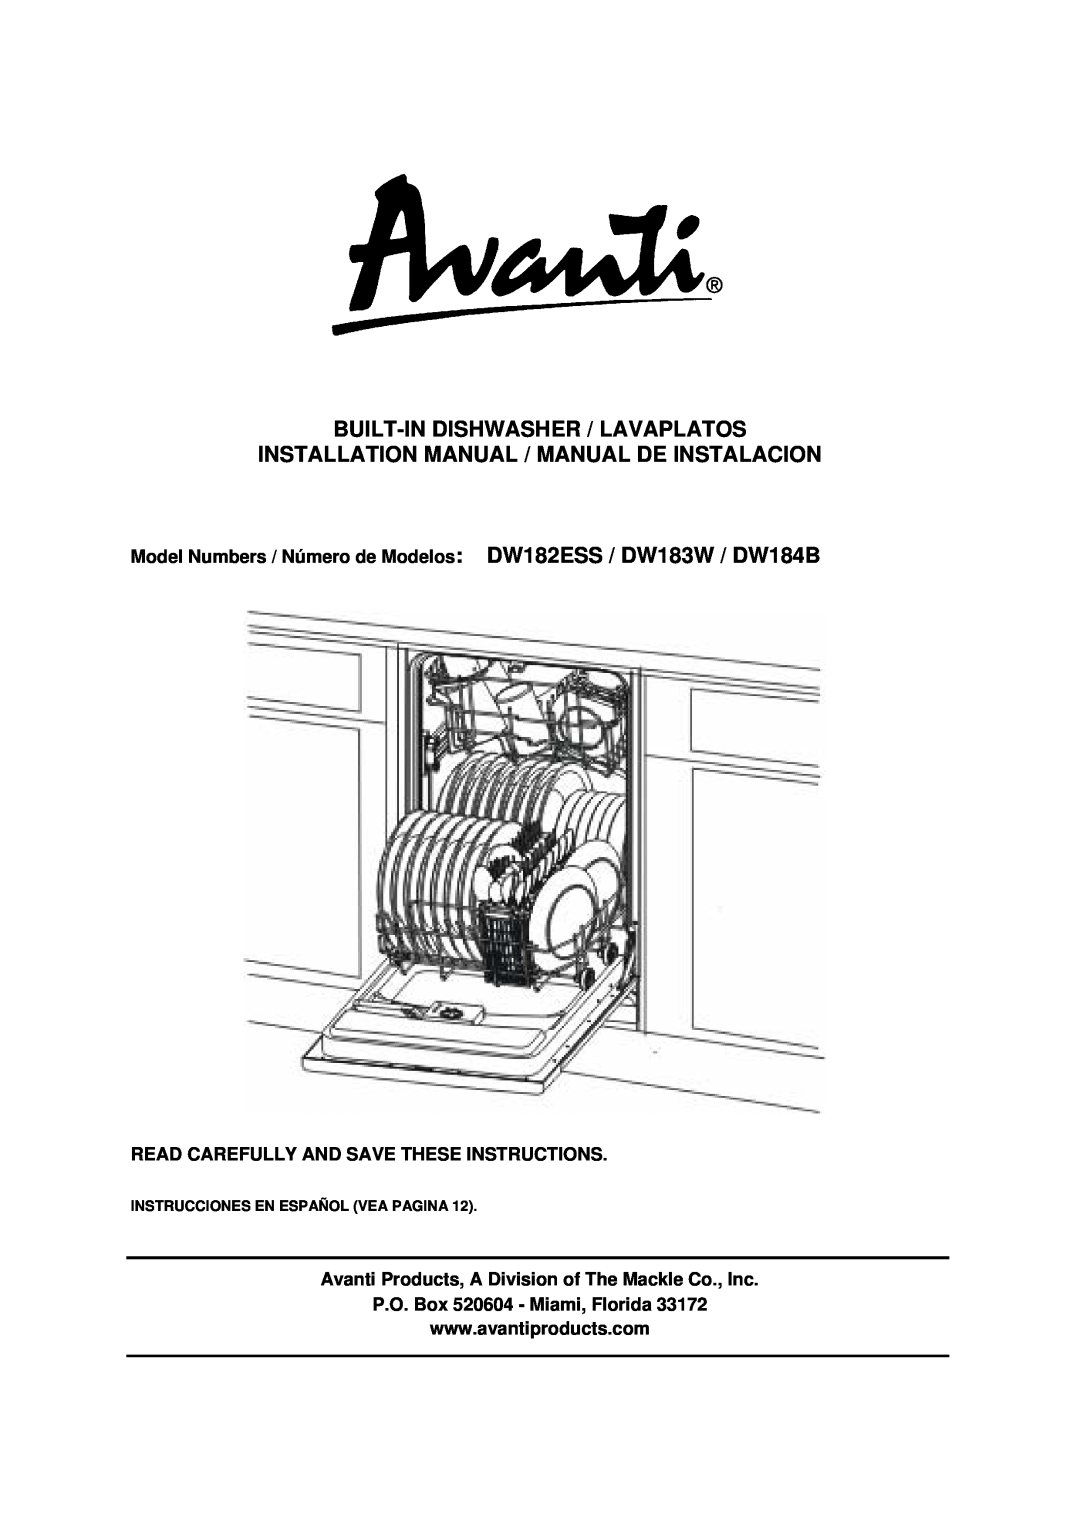 Avanti DW183W, DW184B, DW182ESS Built-Indishwasher / Lavaplatos, Installation Manual / Manual De Instalacion 